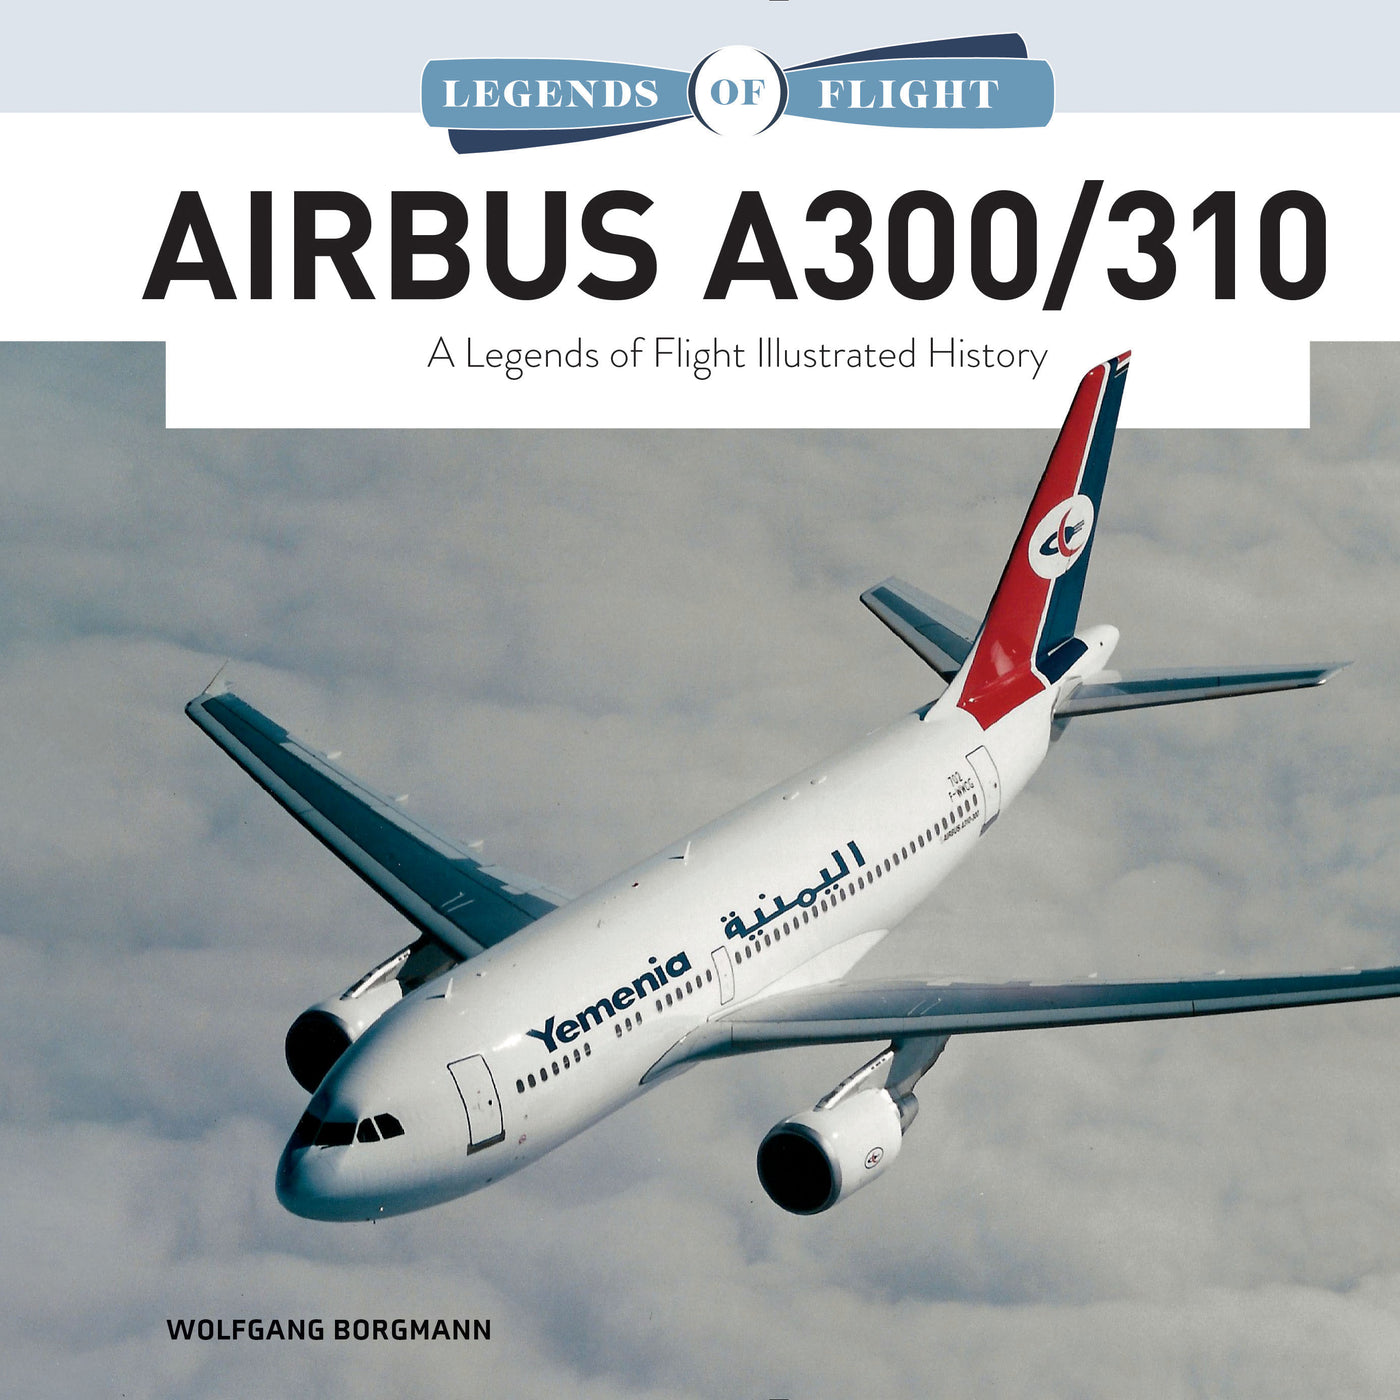 Airbus A300/310